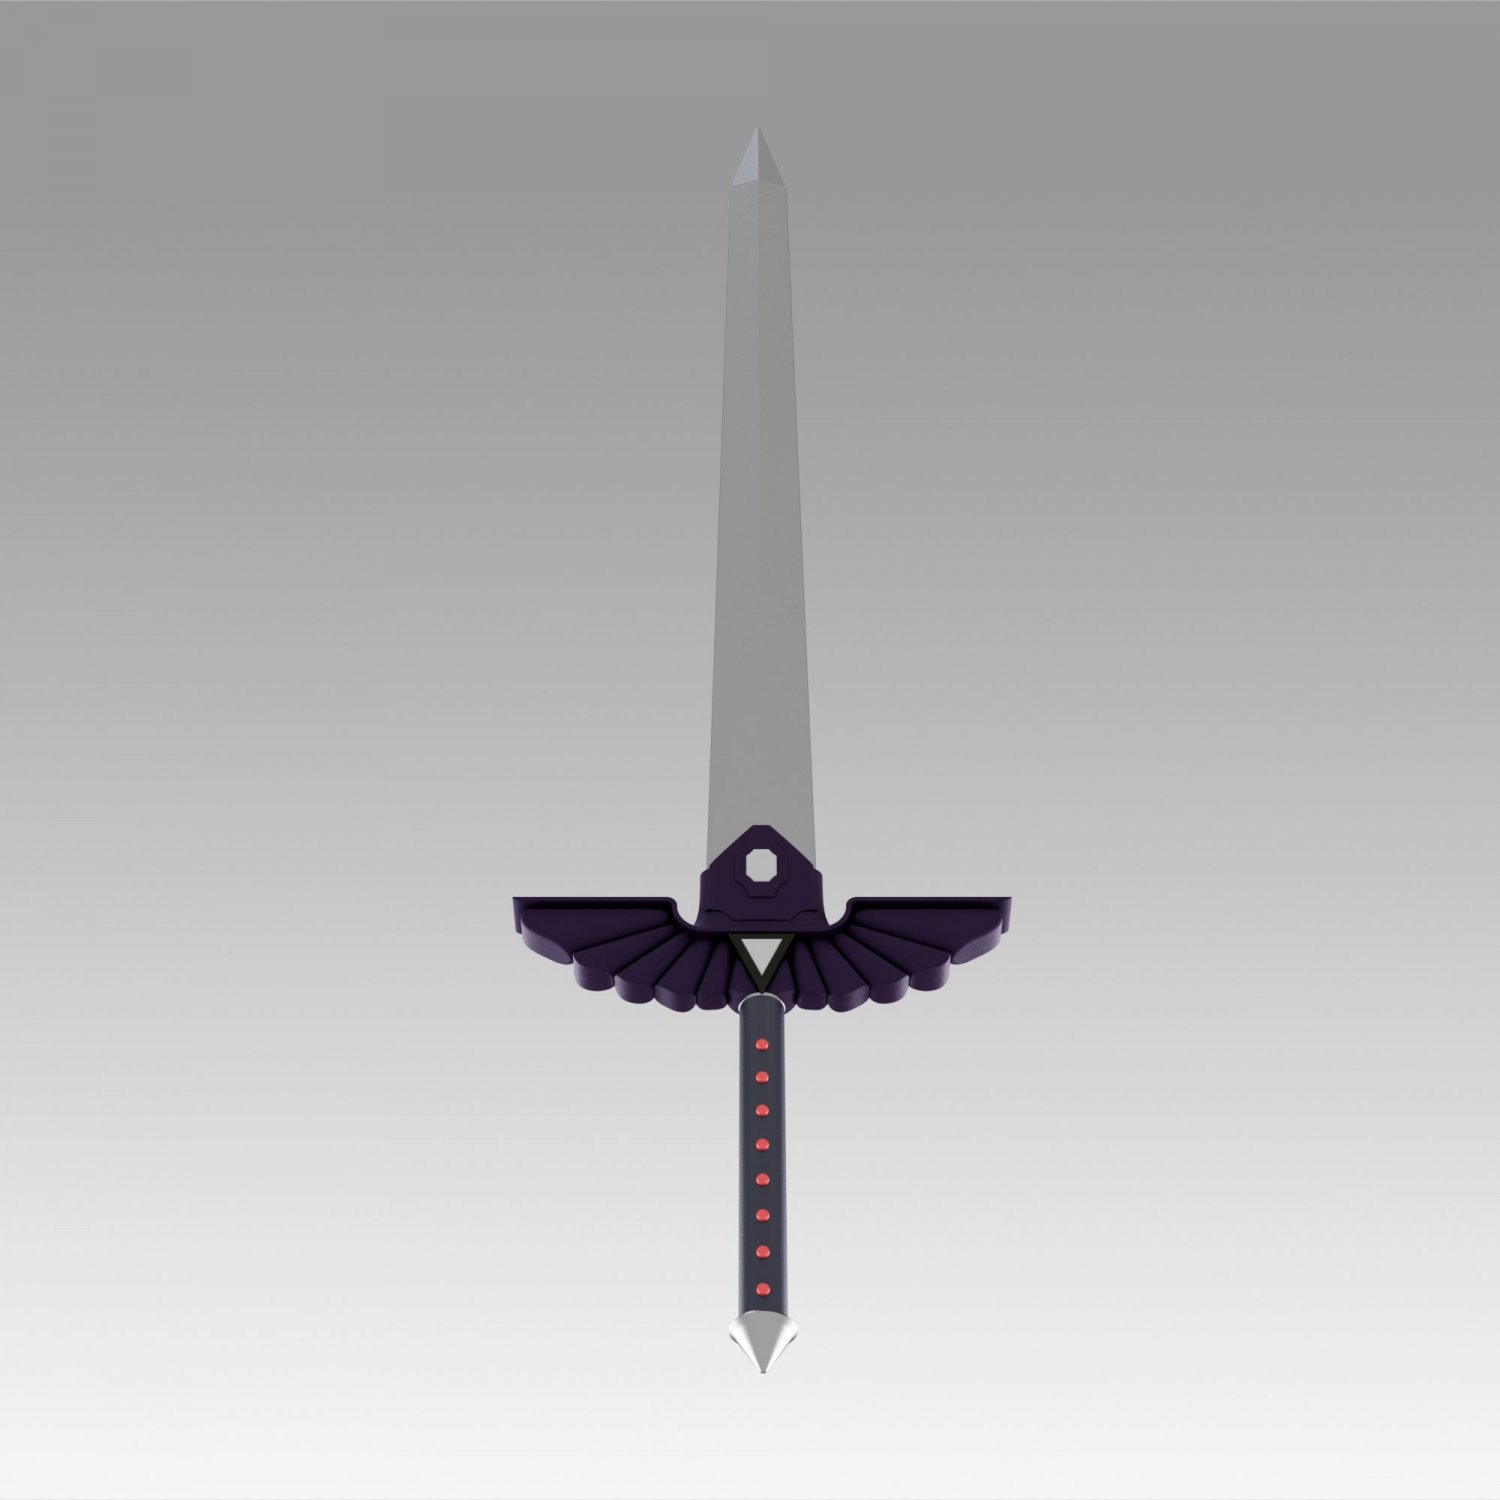 Hades 2 Main Character Dagger Cosplay Weapon Prop